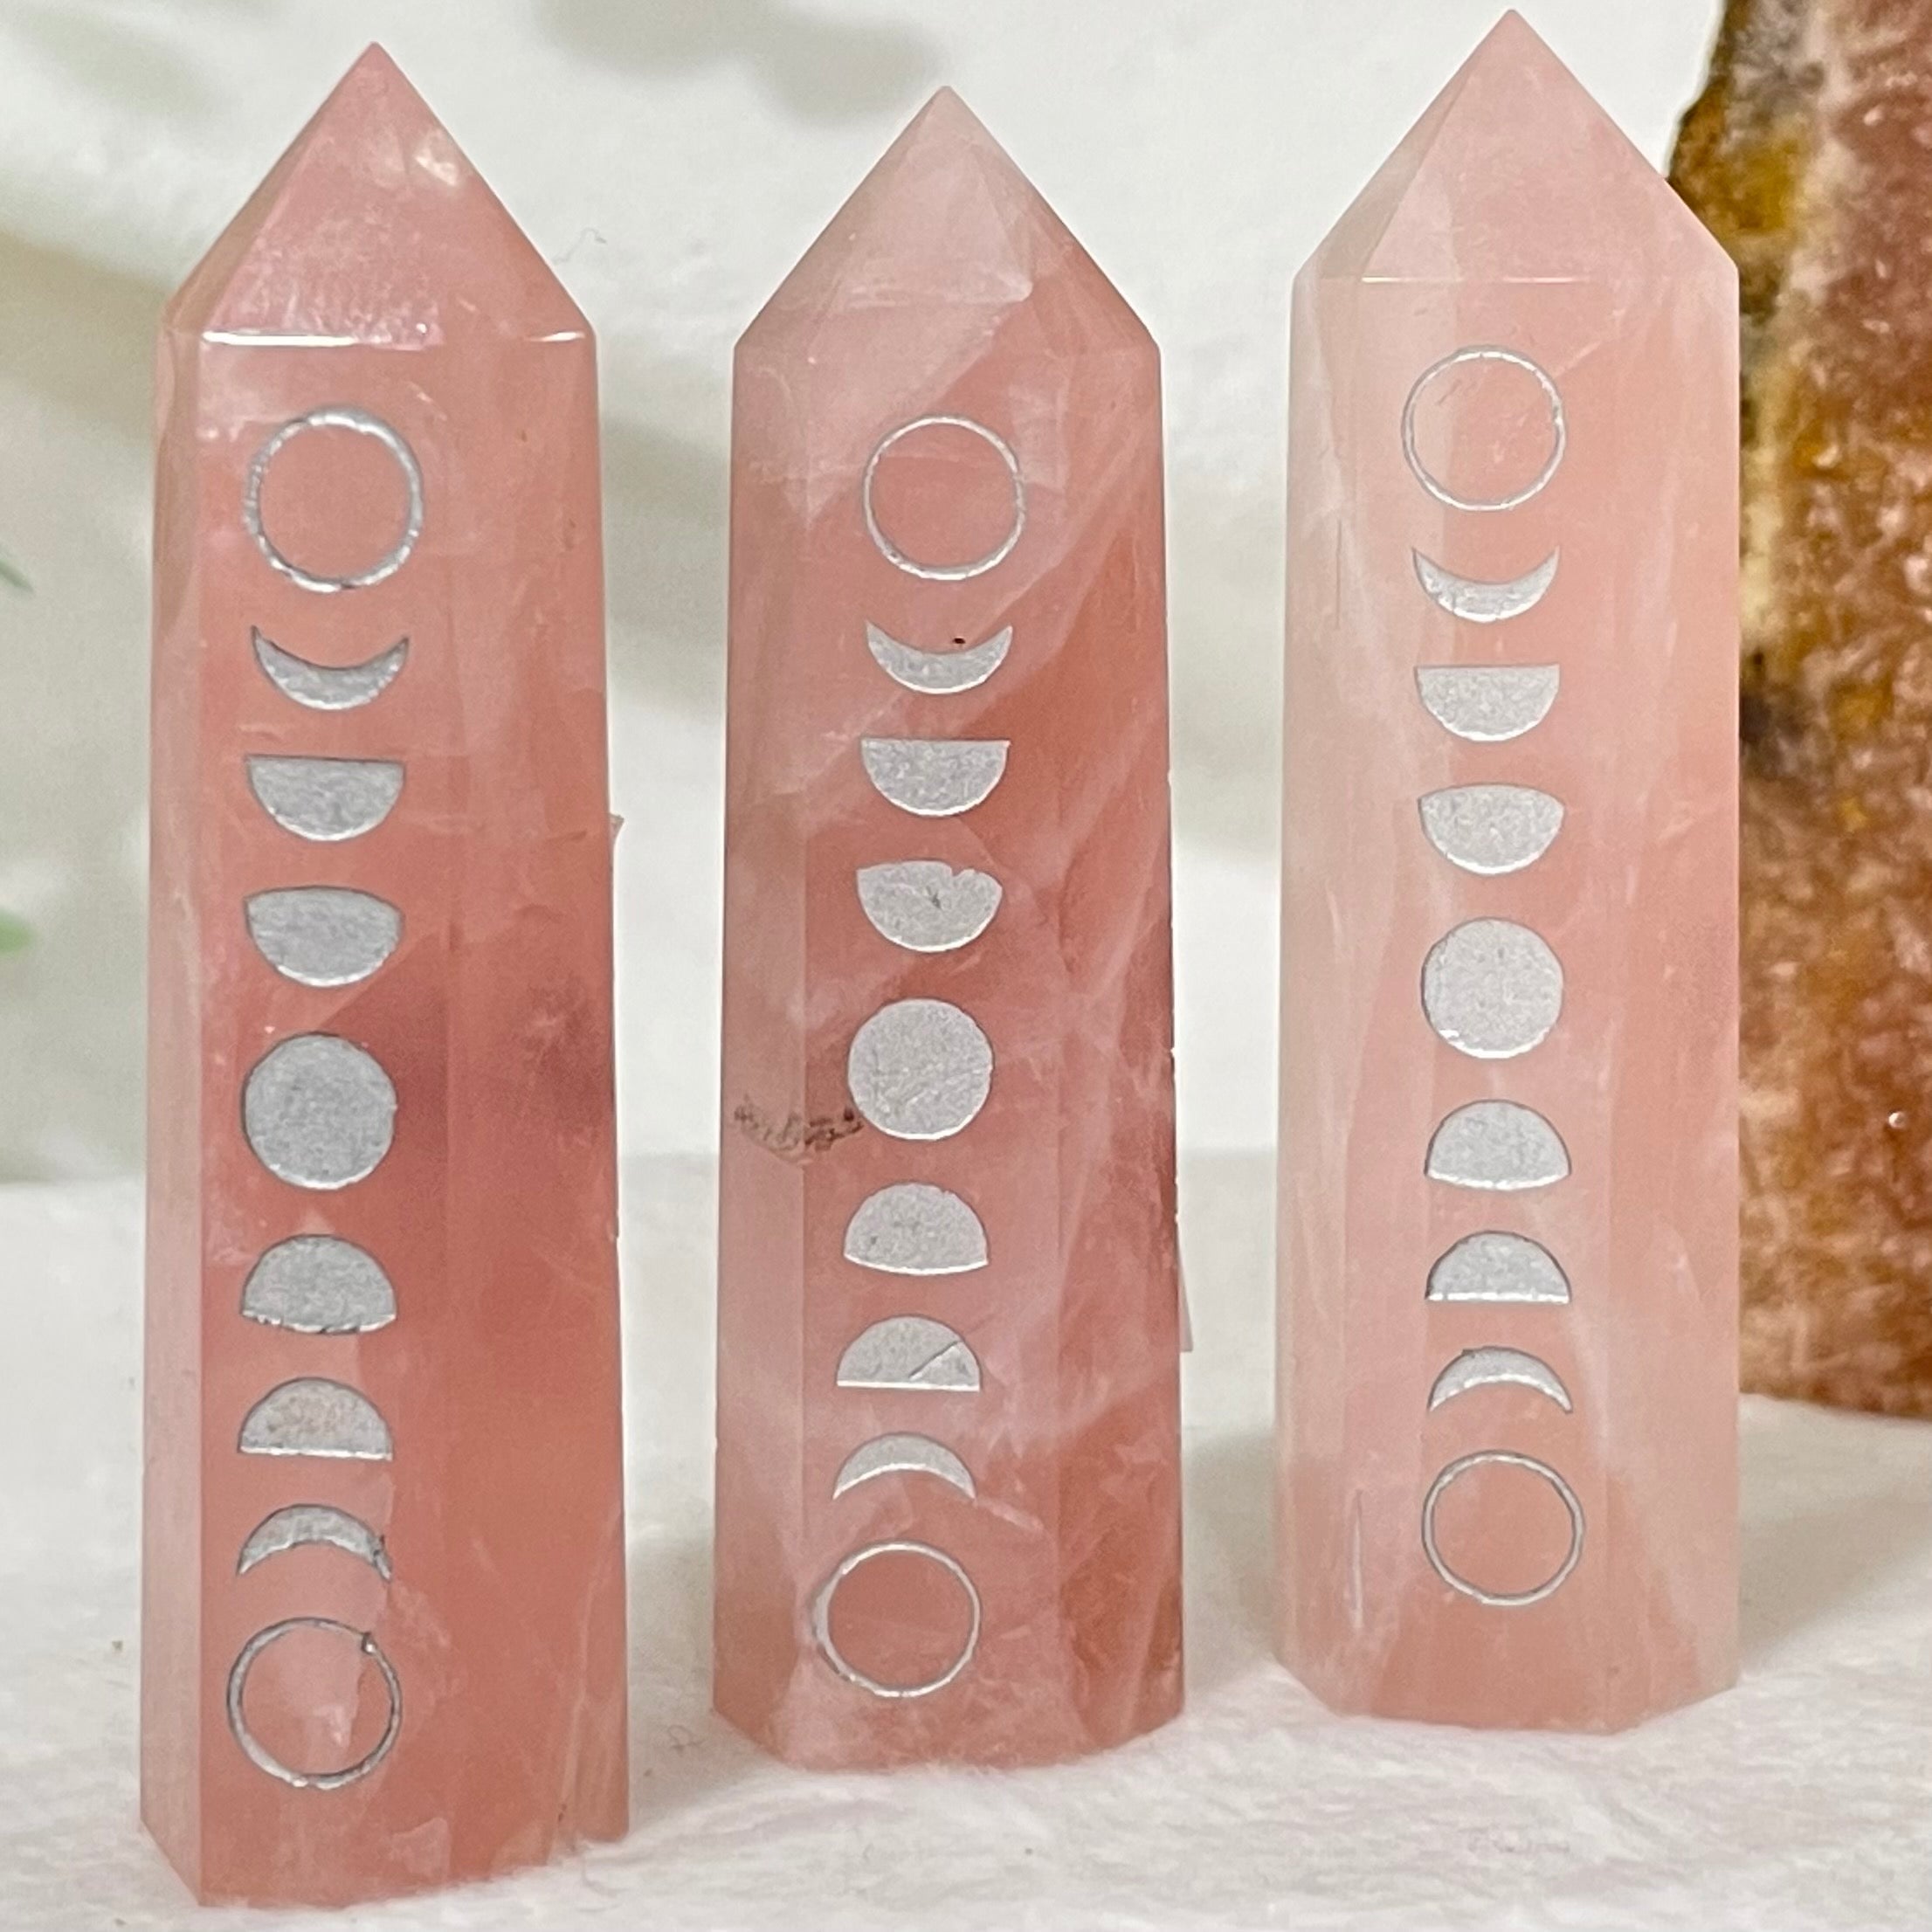 Luna Phase Generators Crystals The Crystal and Wellness Warehouse Rose Quartz 